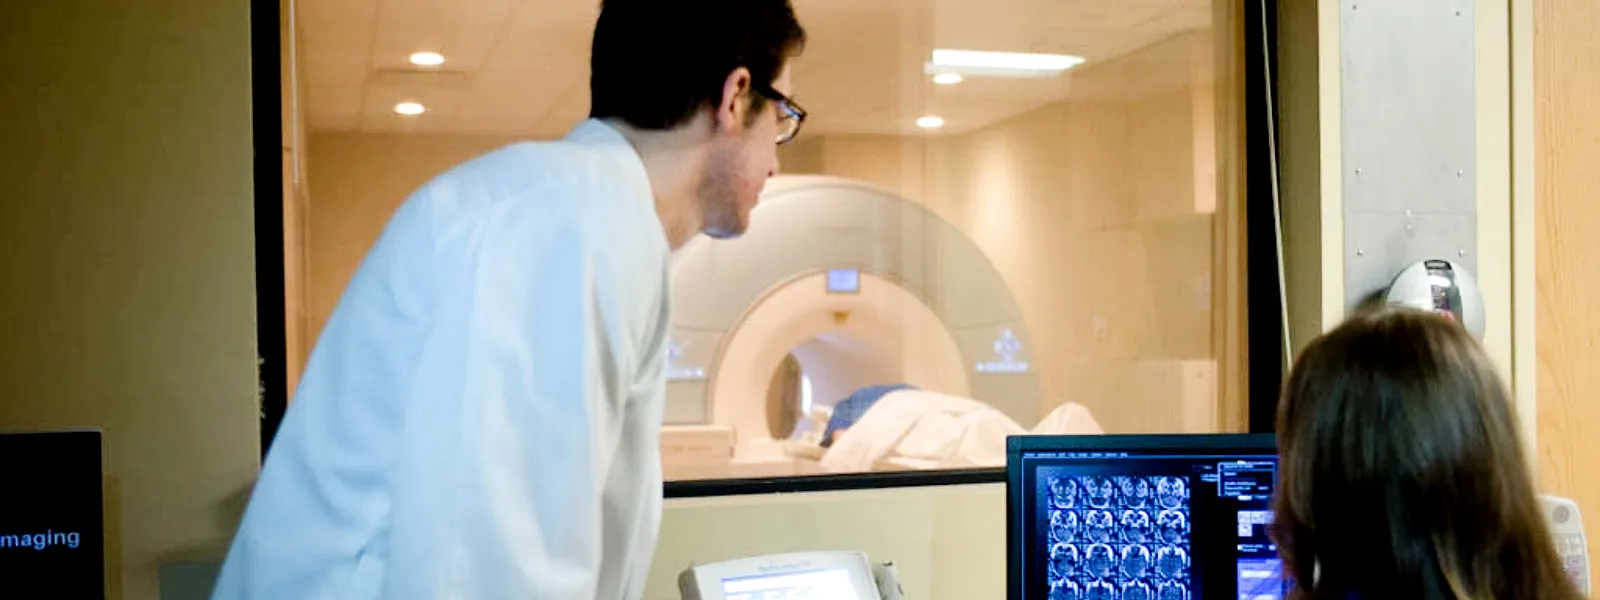 Imaging technicians observe an MRI procedure